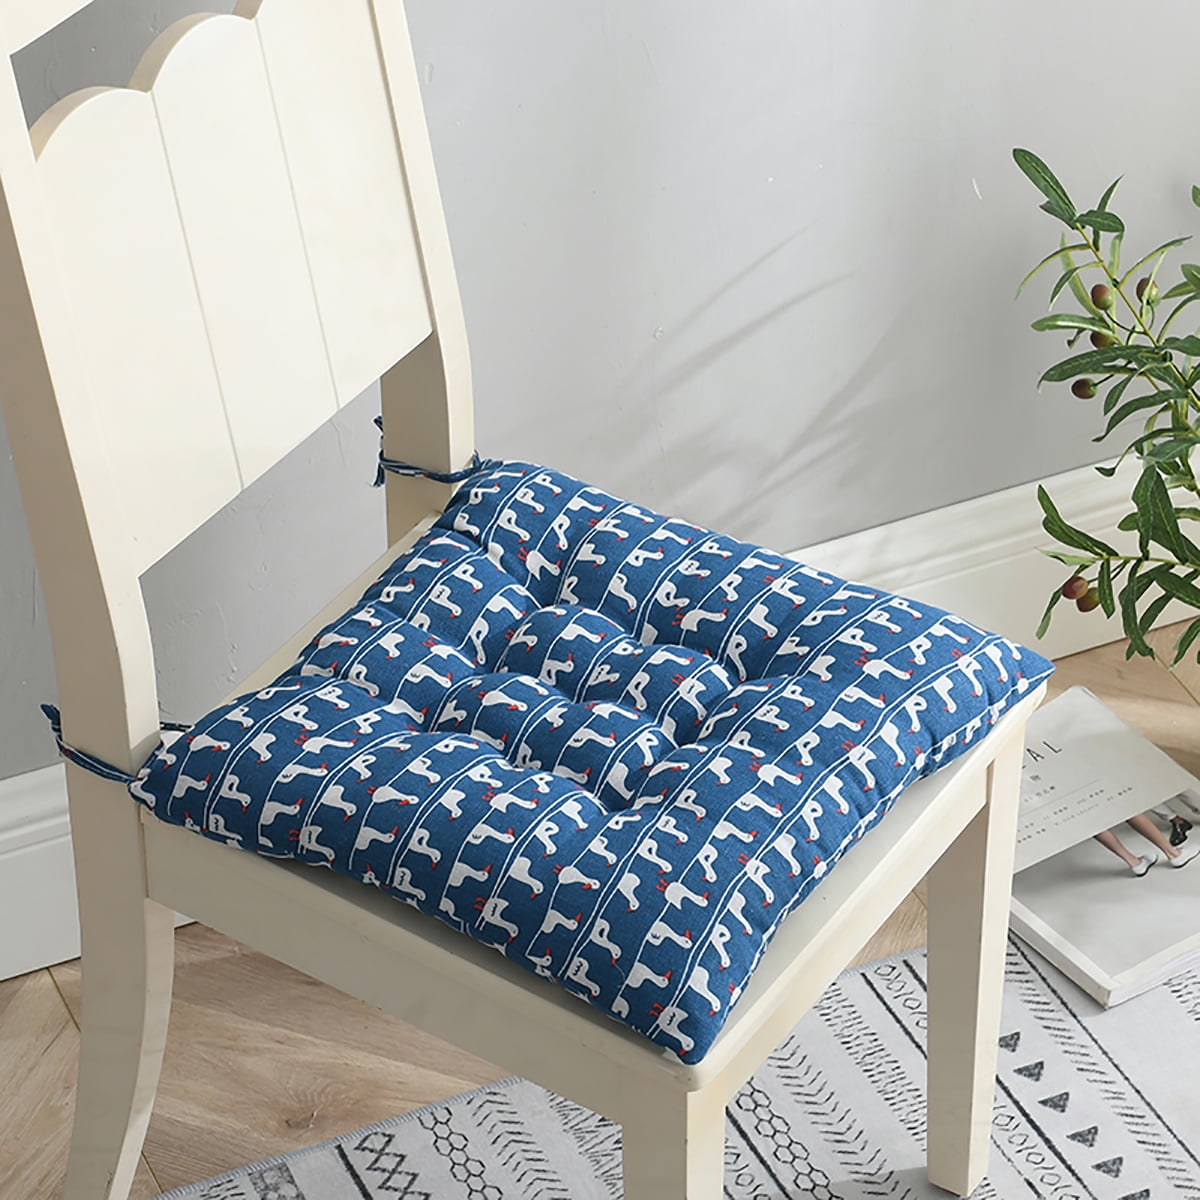 Chair Seat Cushion Pads Tie On Indoor Outdoor Garden Patio Home Kitchen Office 